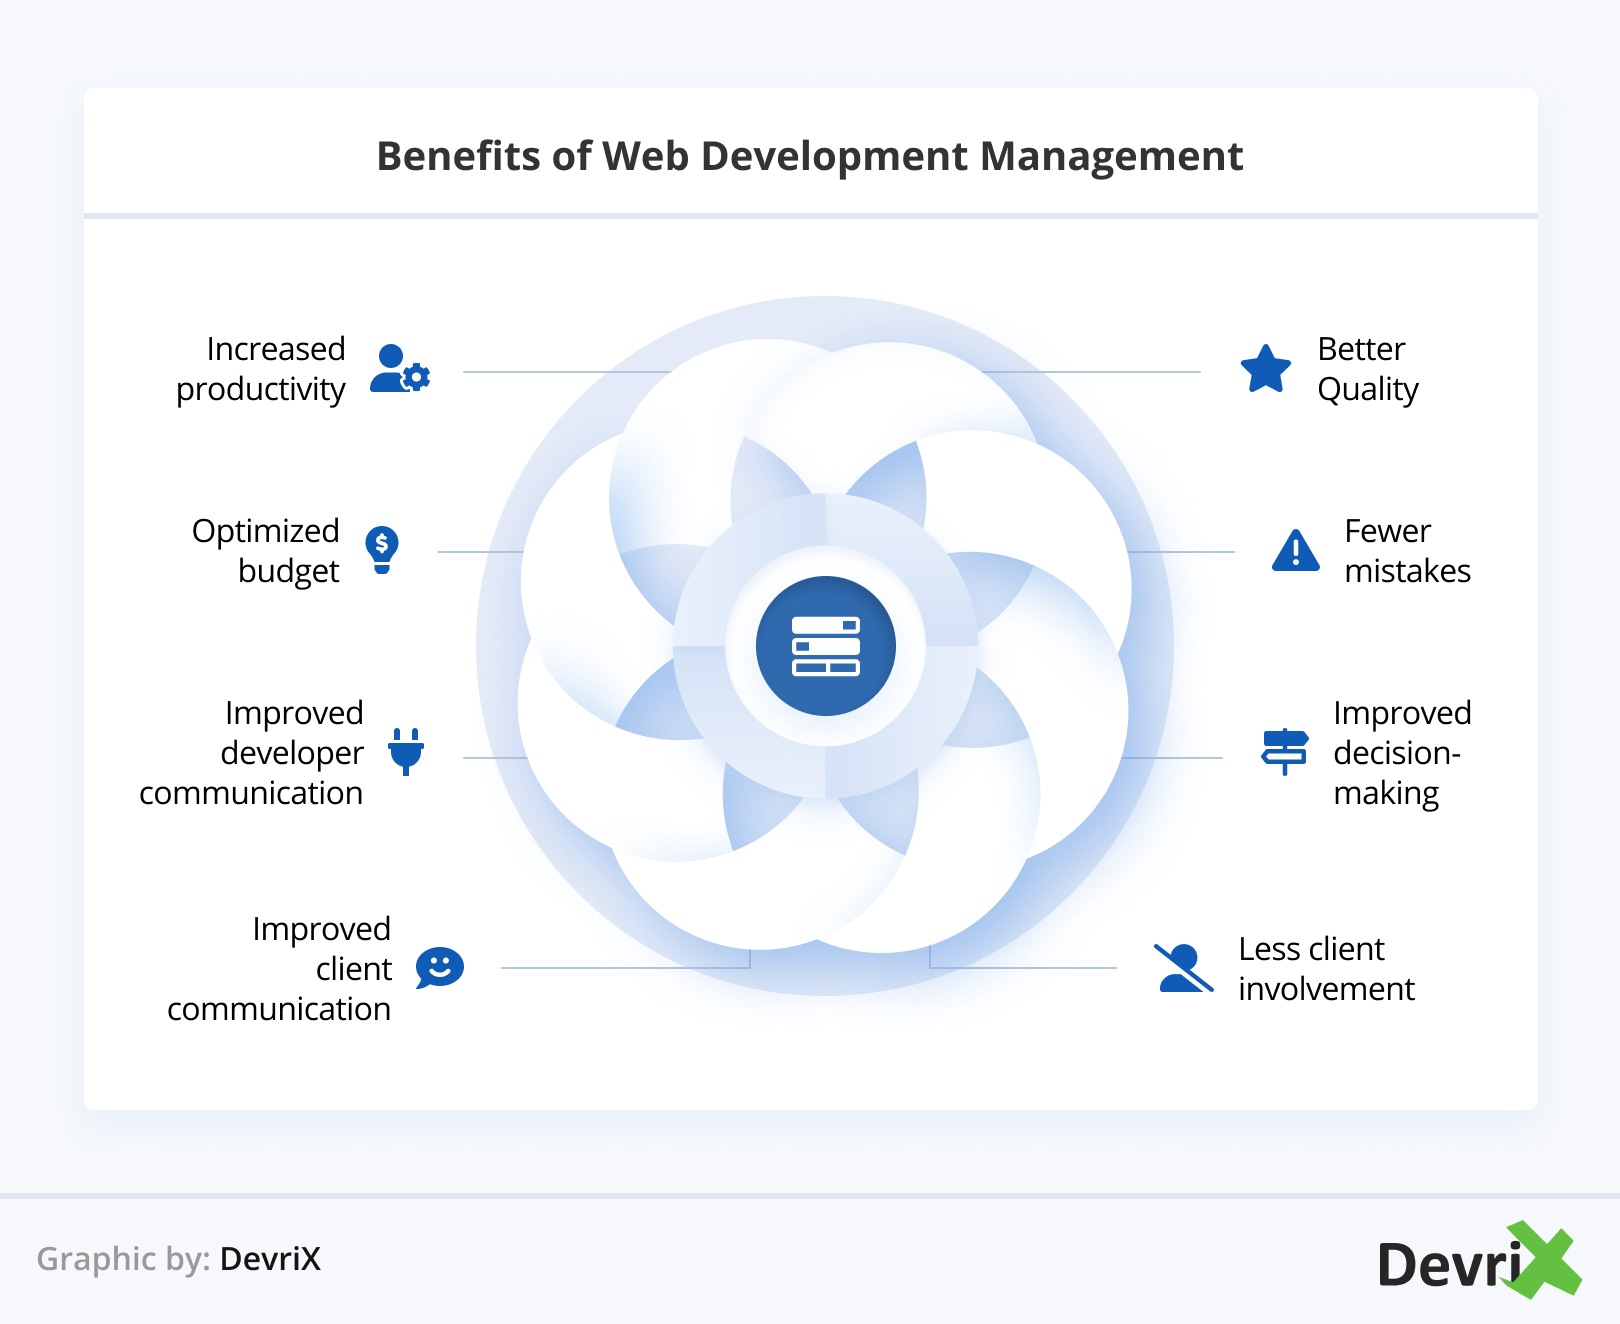 Benefits of Web Development Management